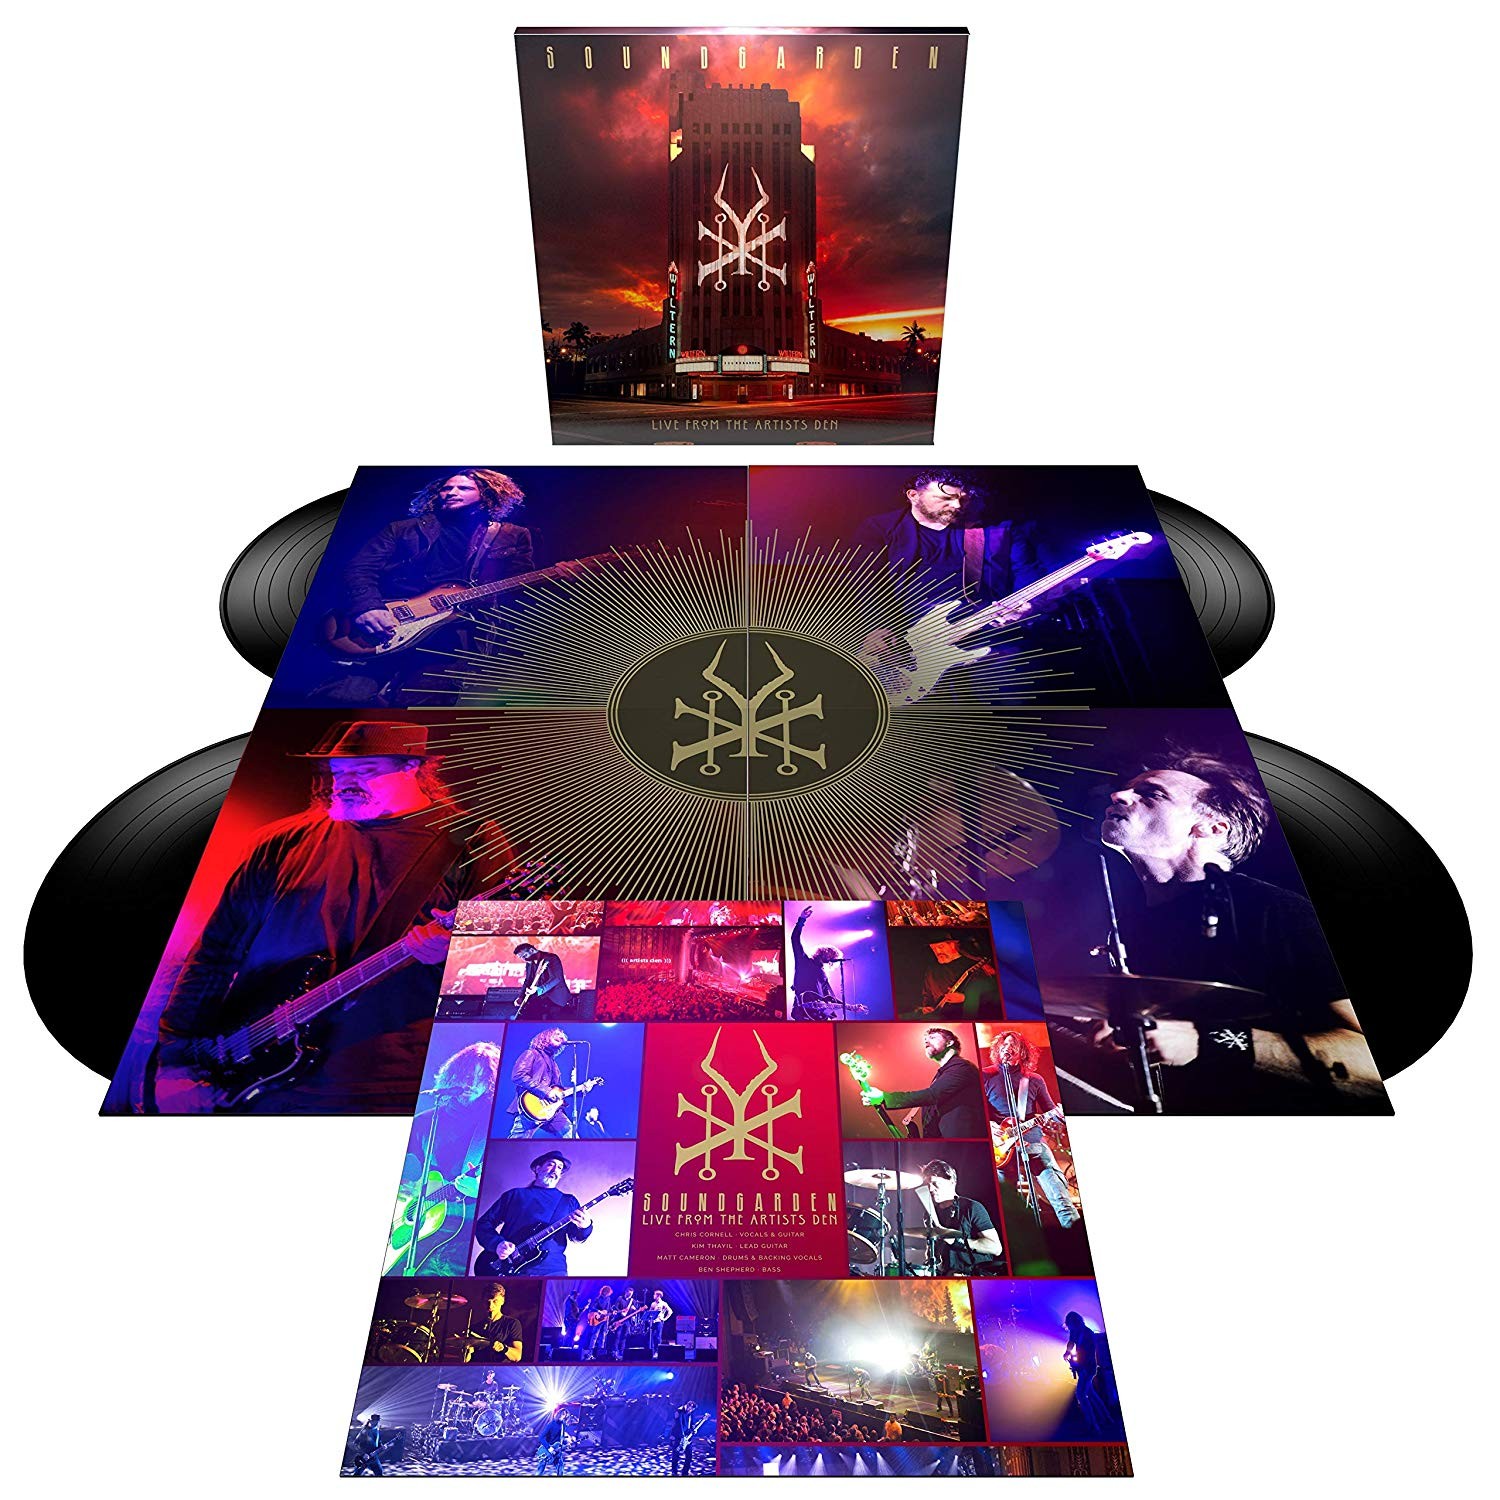 Soundgarden - Live From The Artists Den 4XLP Vinyl